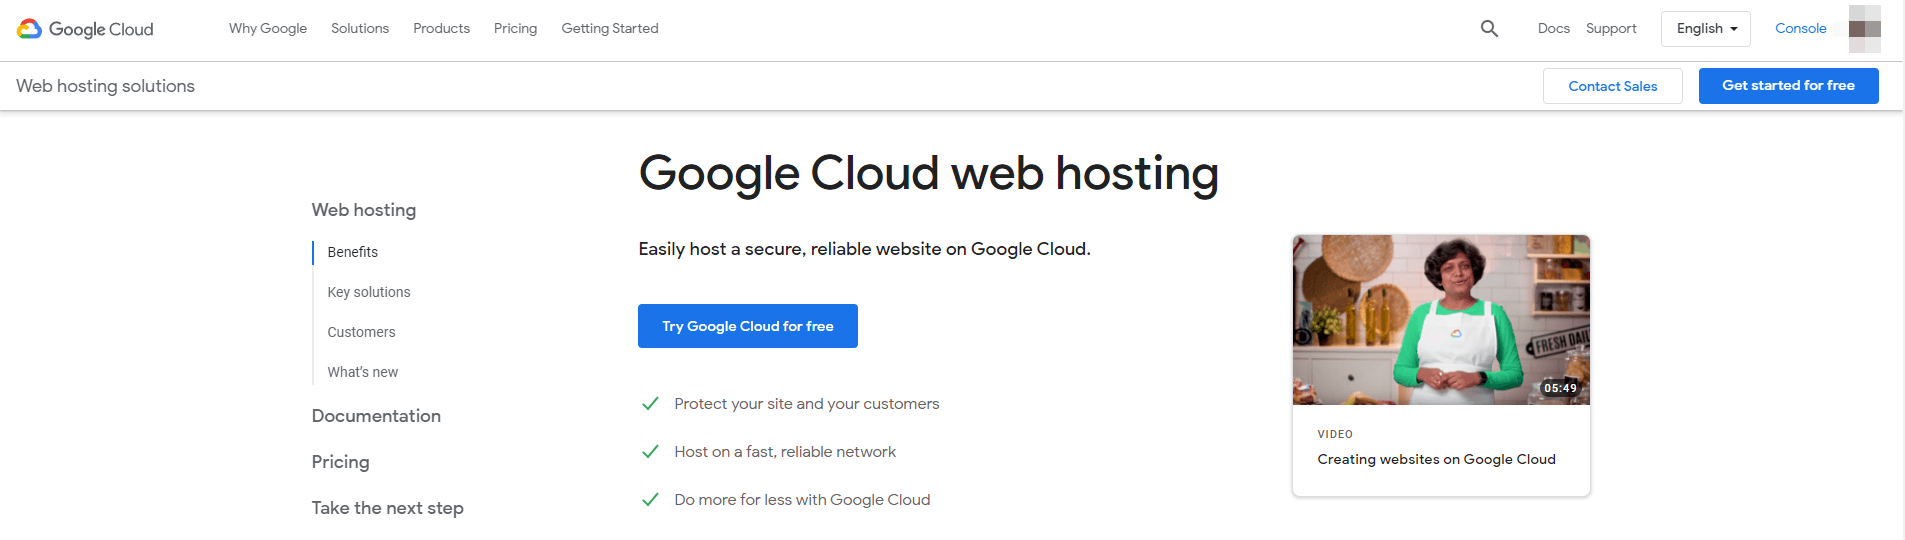 Hébergement Web Google Cloud.